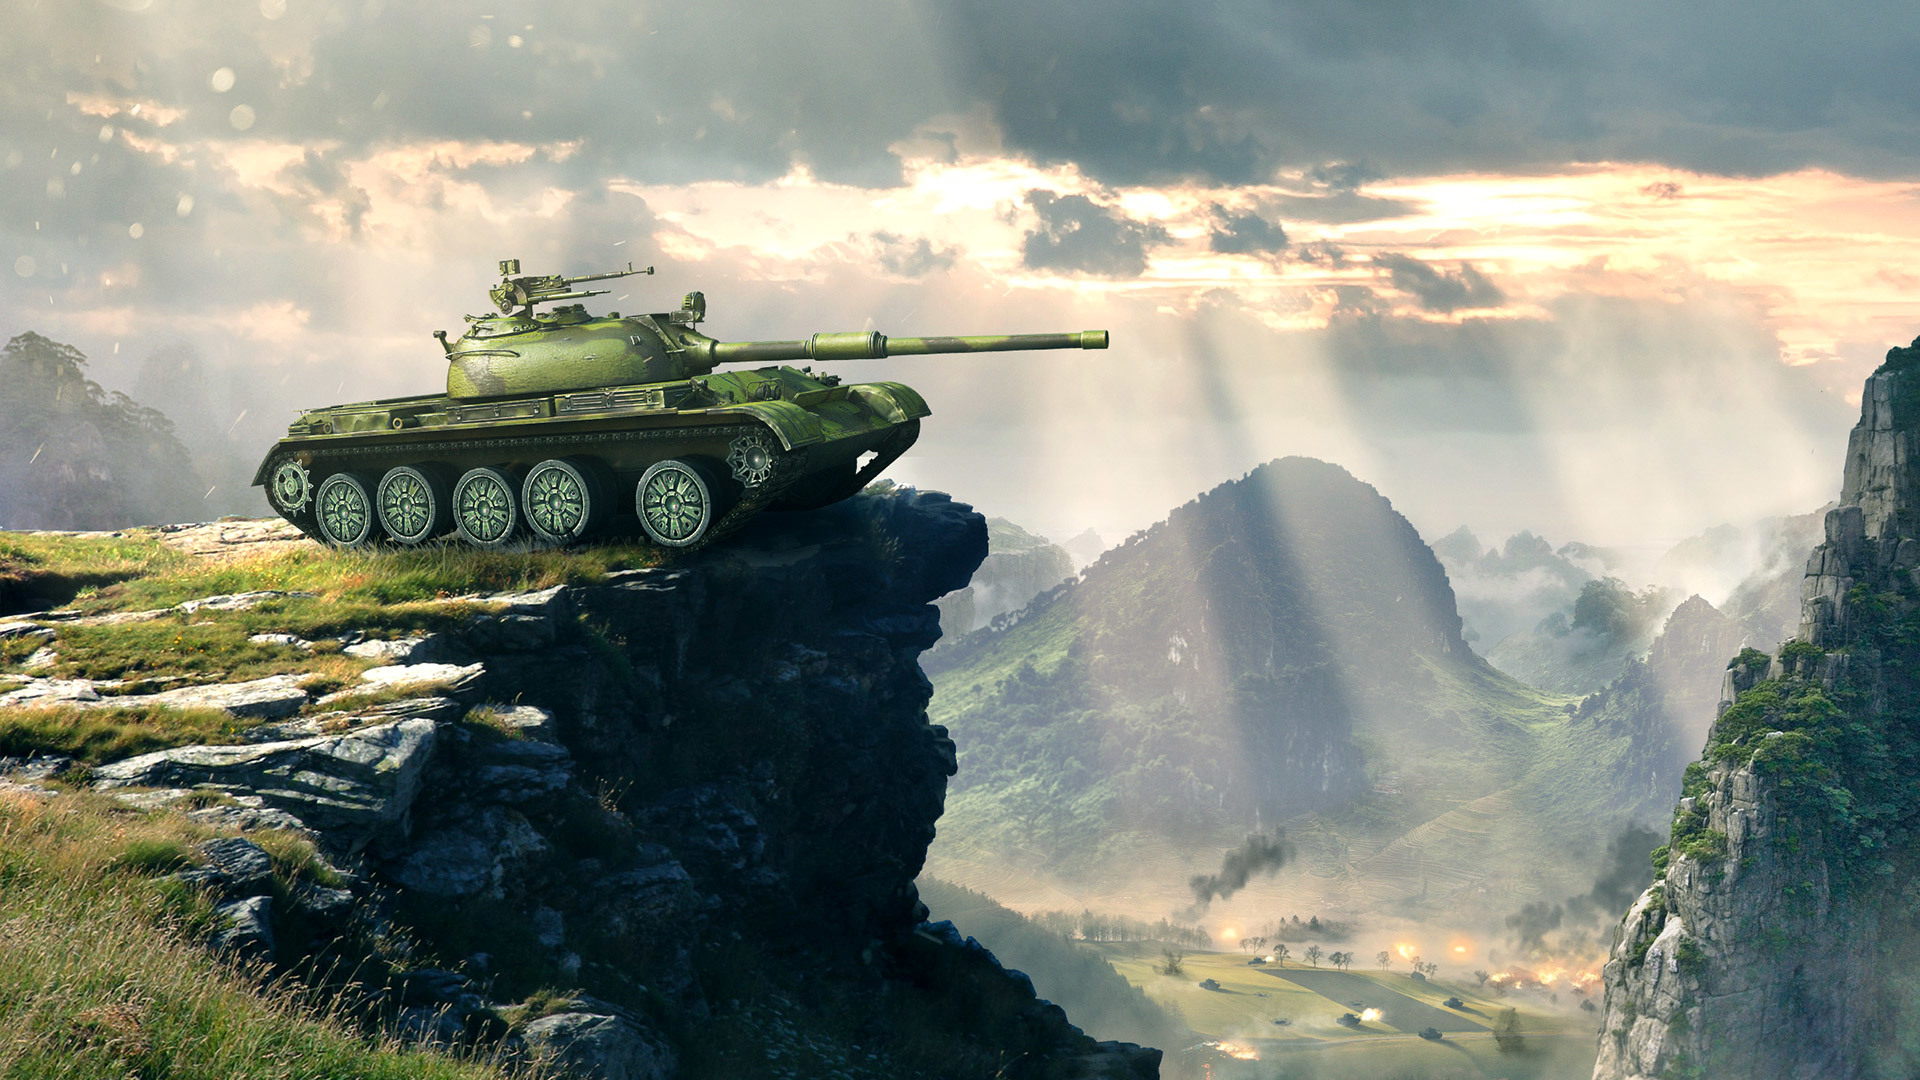 Wallpapers from World of Tanks Blitz | gamepressure.com